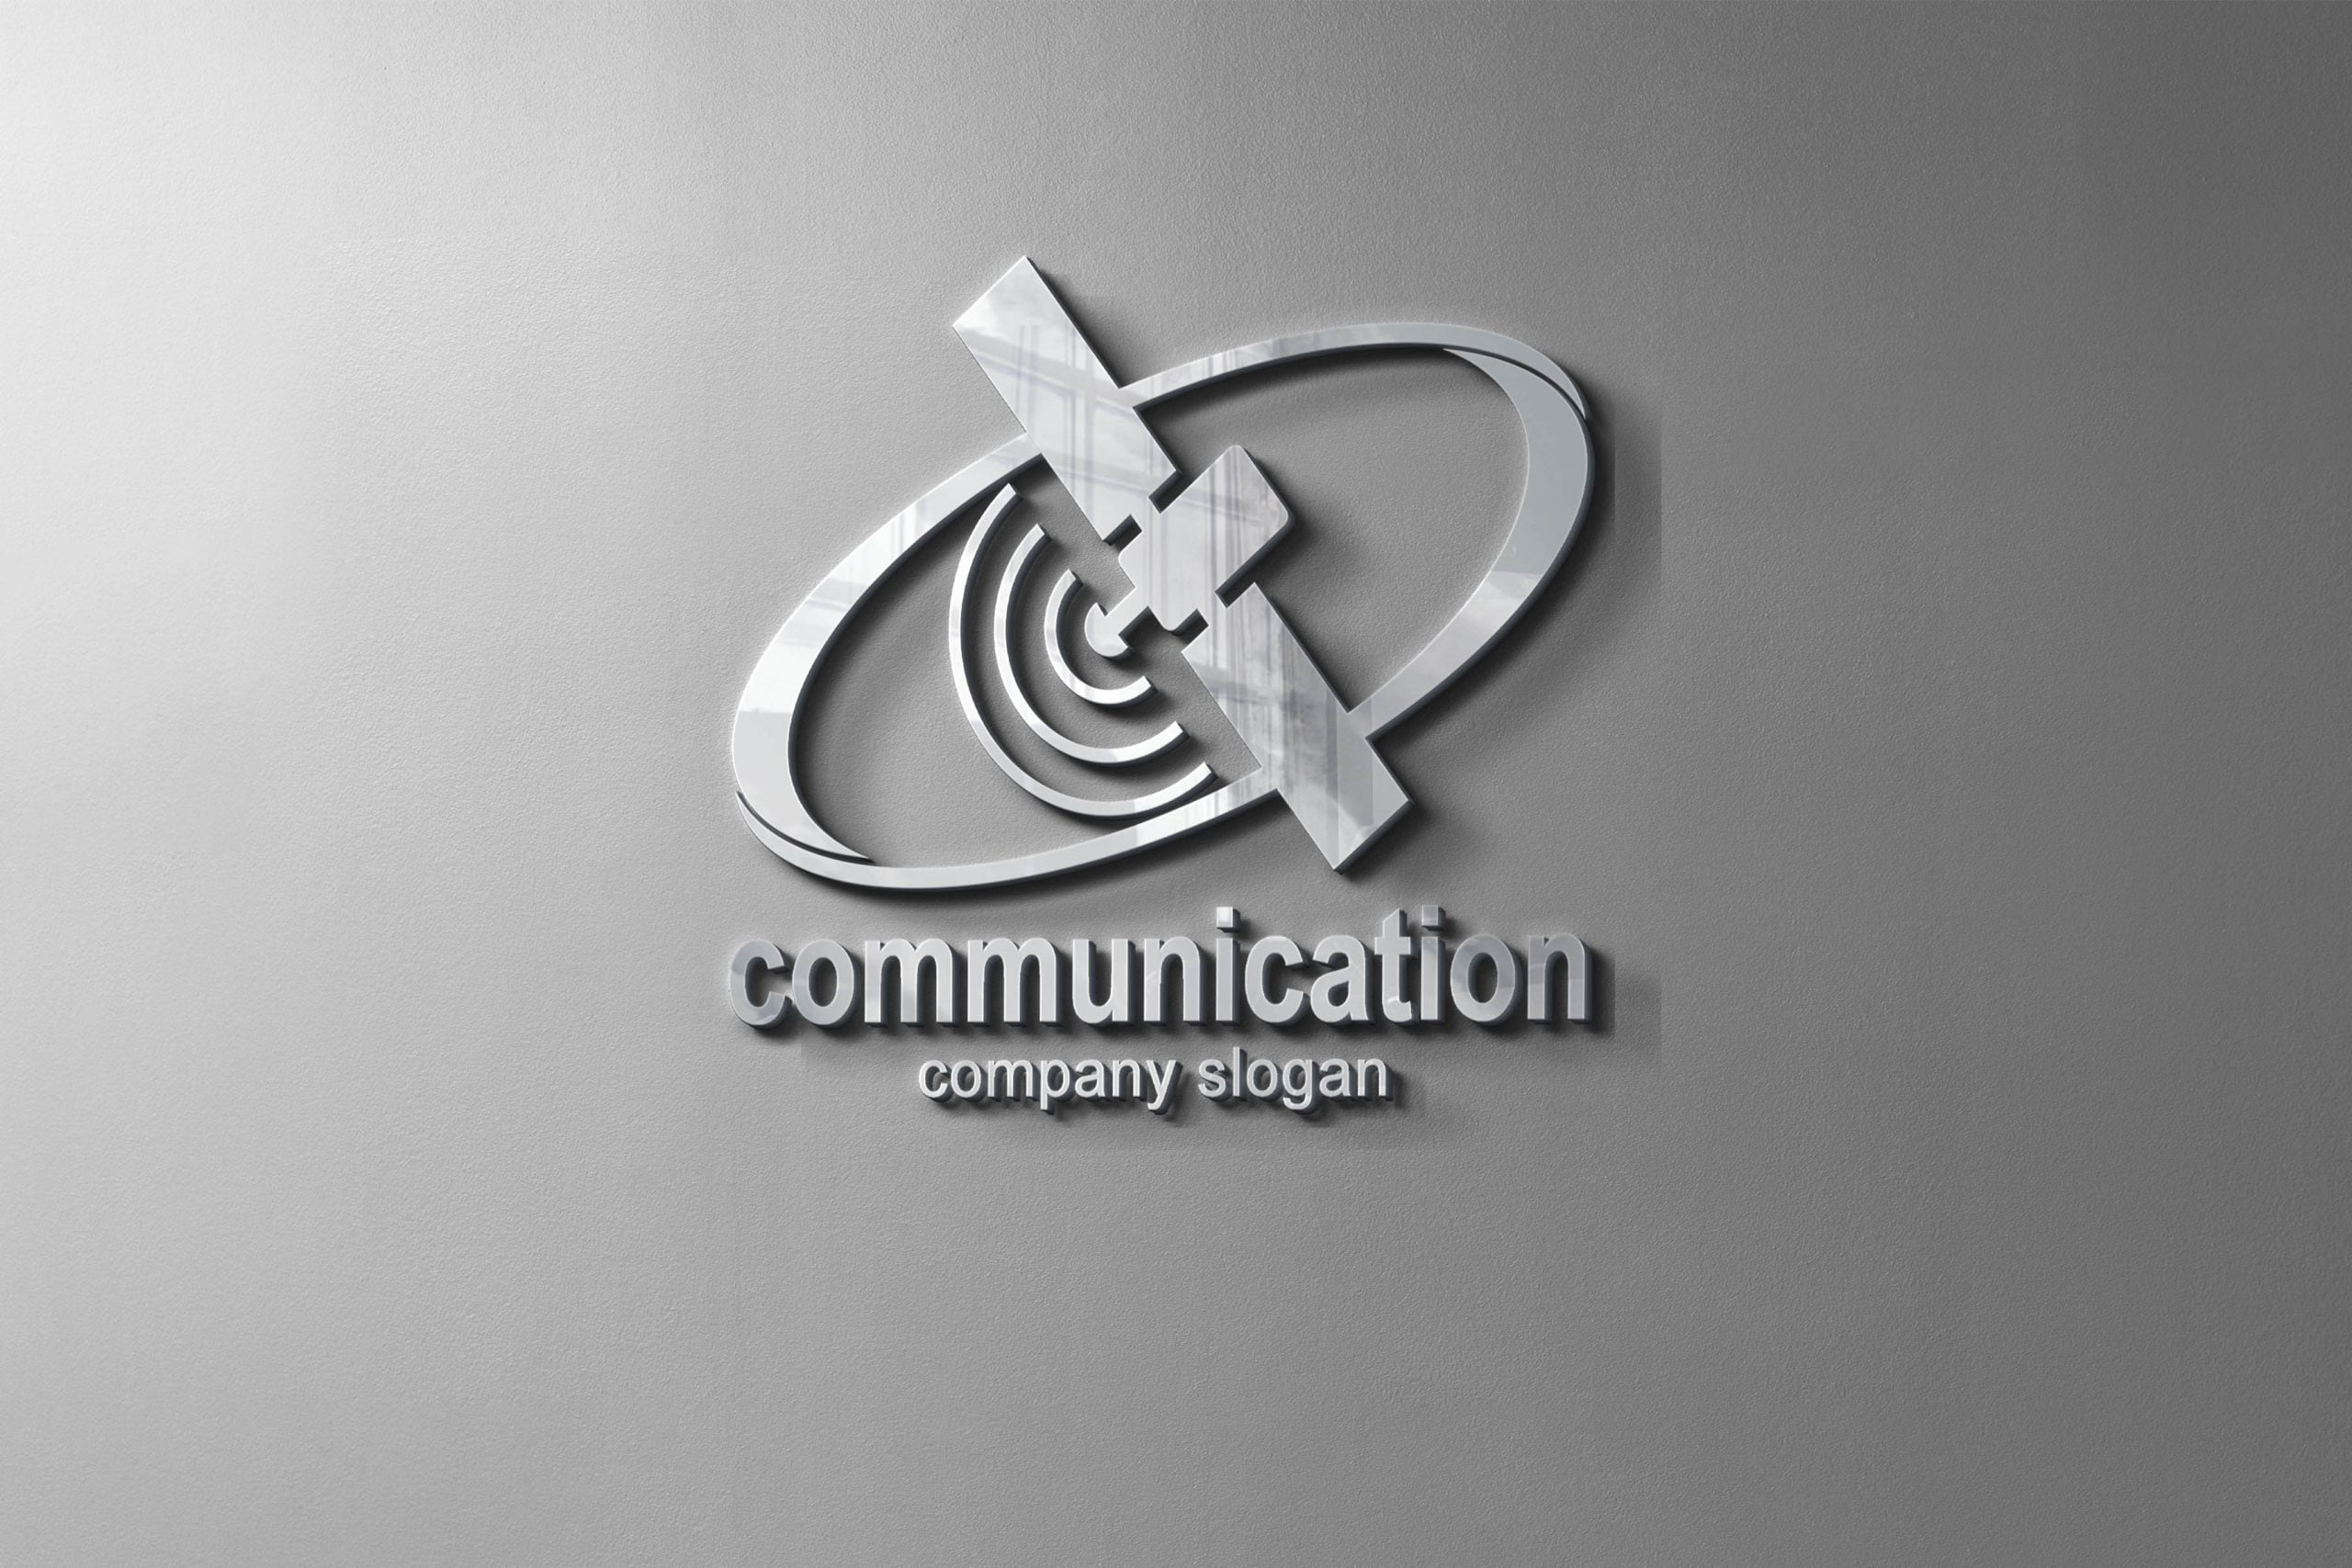 Communication company logo free psd